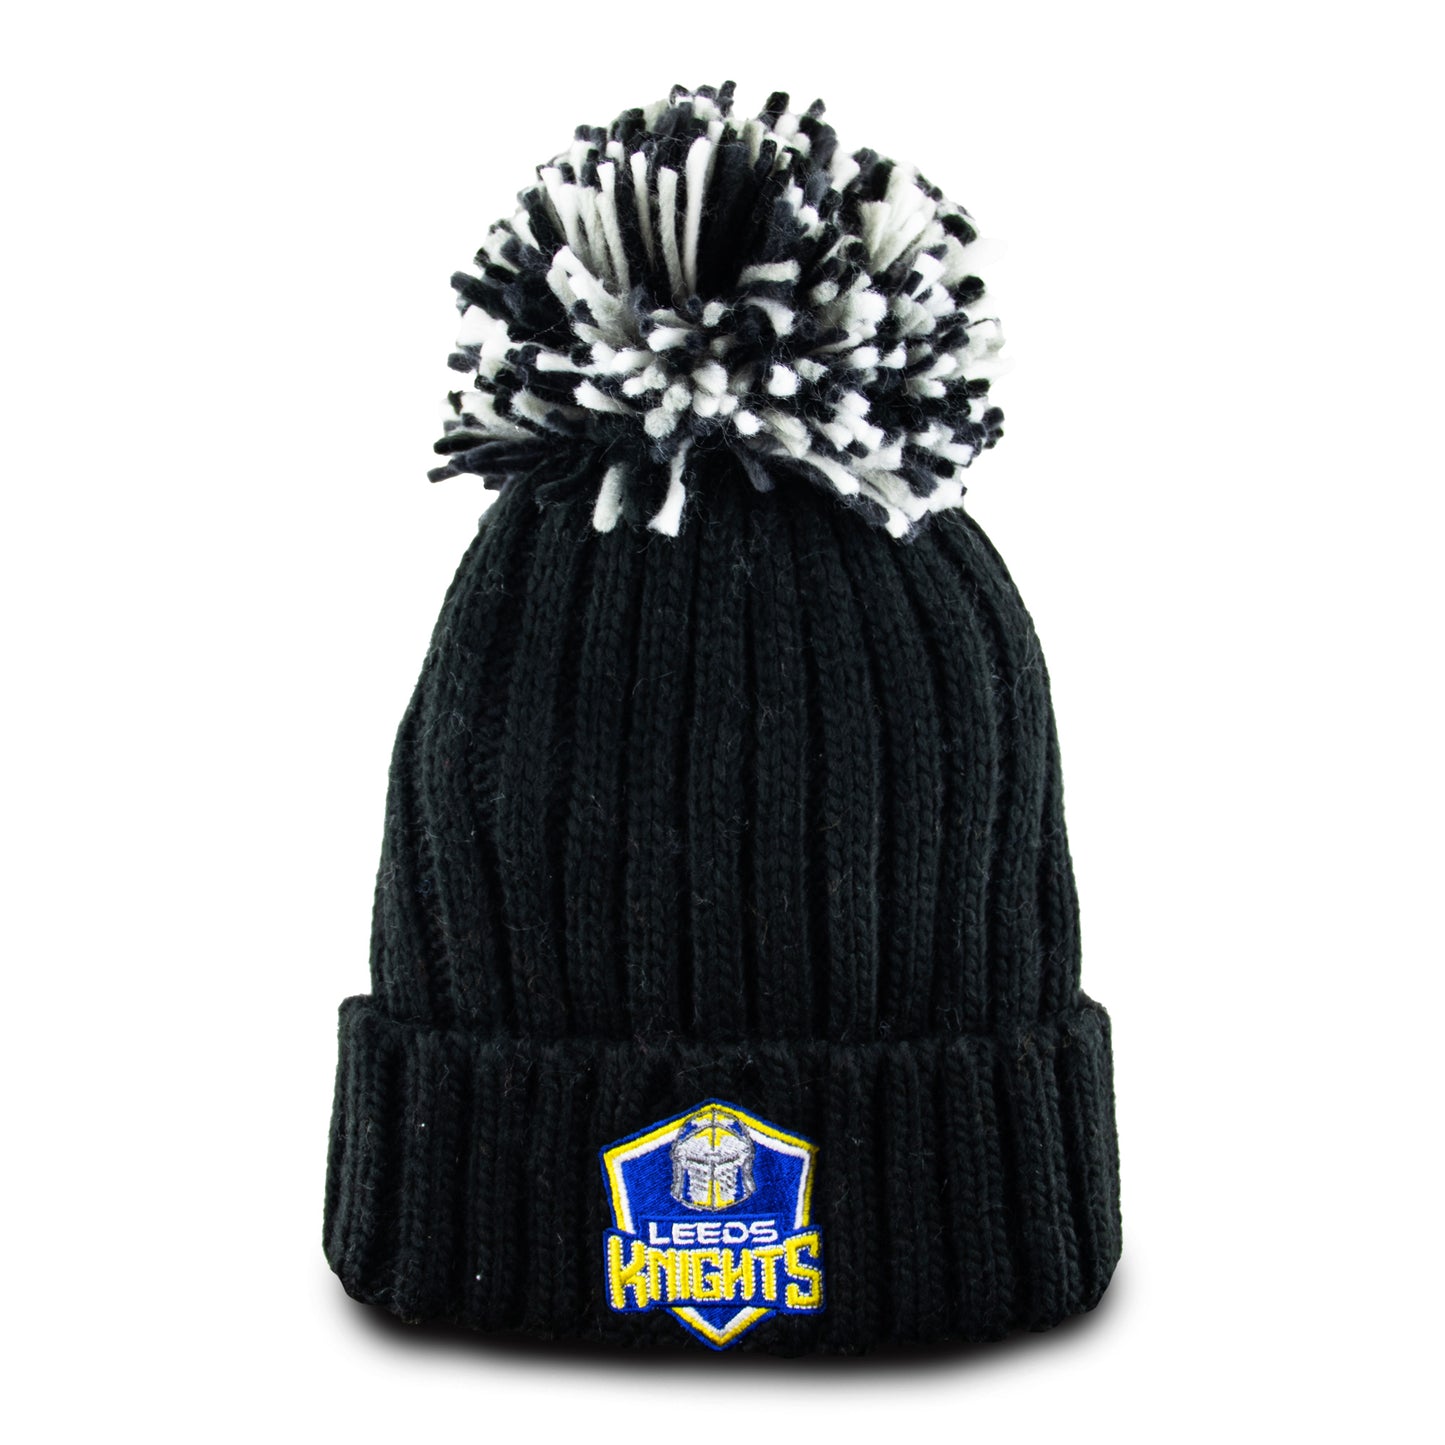 Leeds Knights Black Bobble Hat